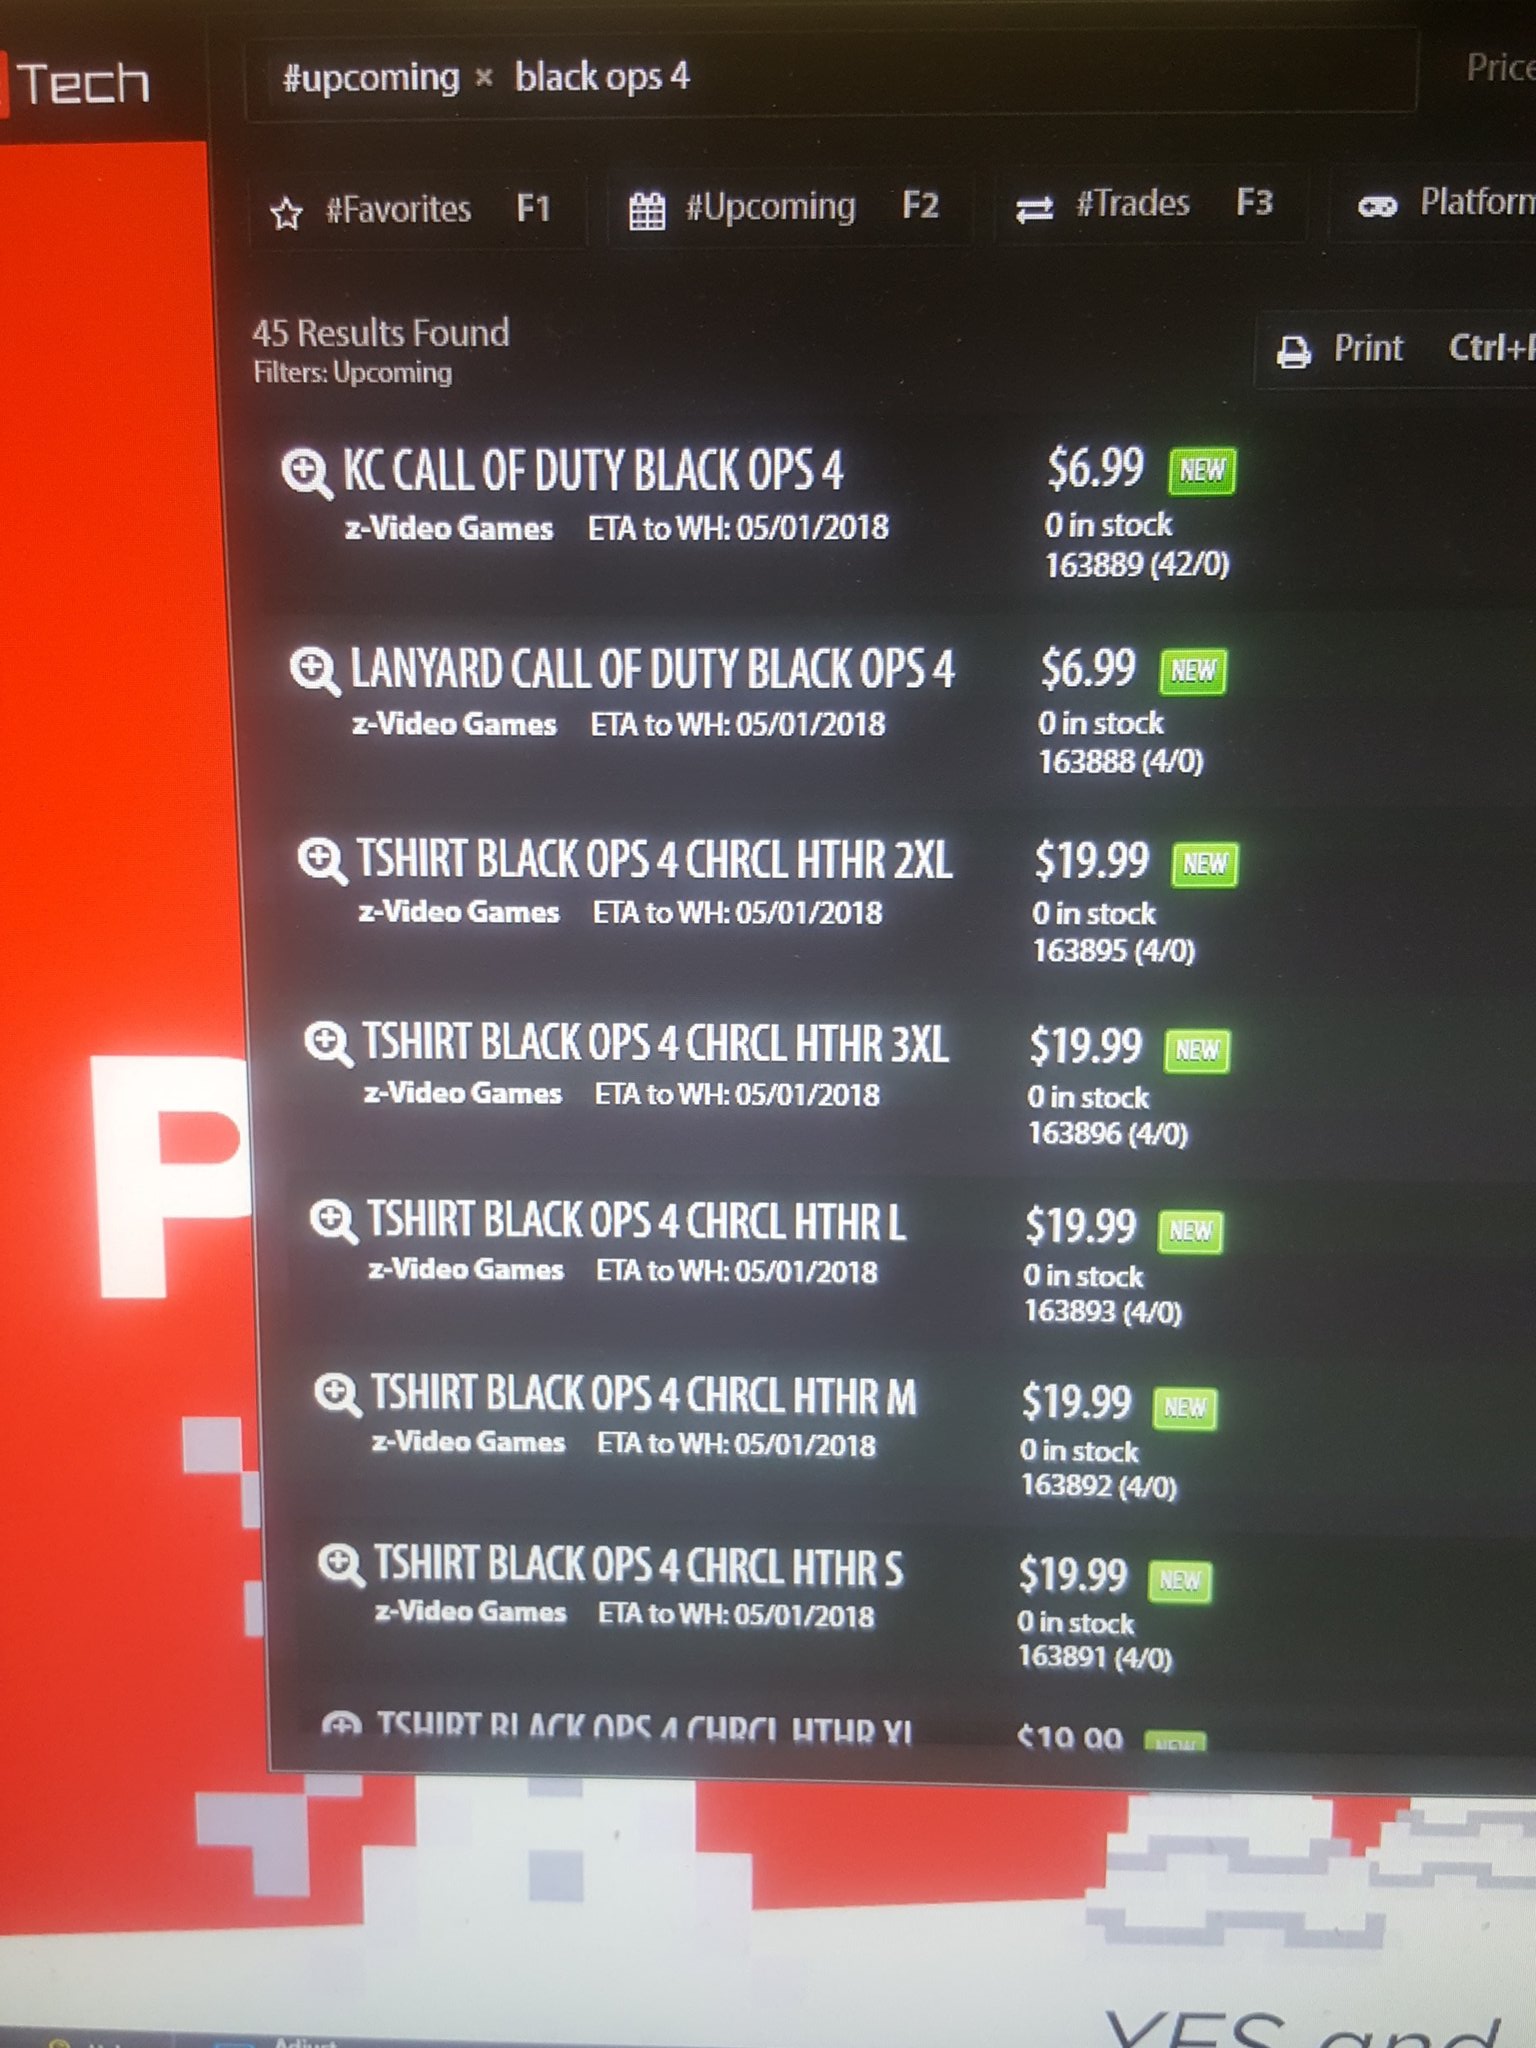 COD Black Ops 4 Gamestop Merch Listing